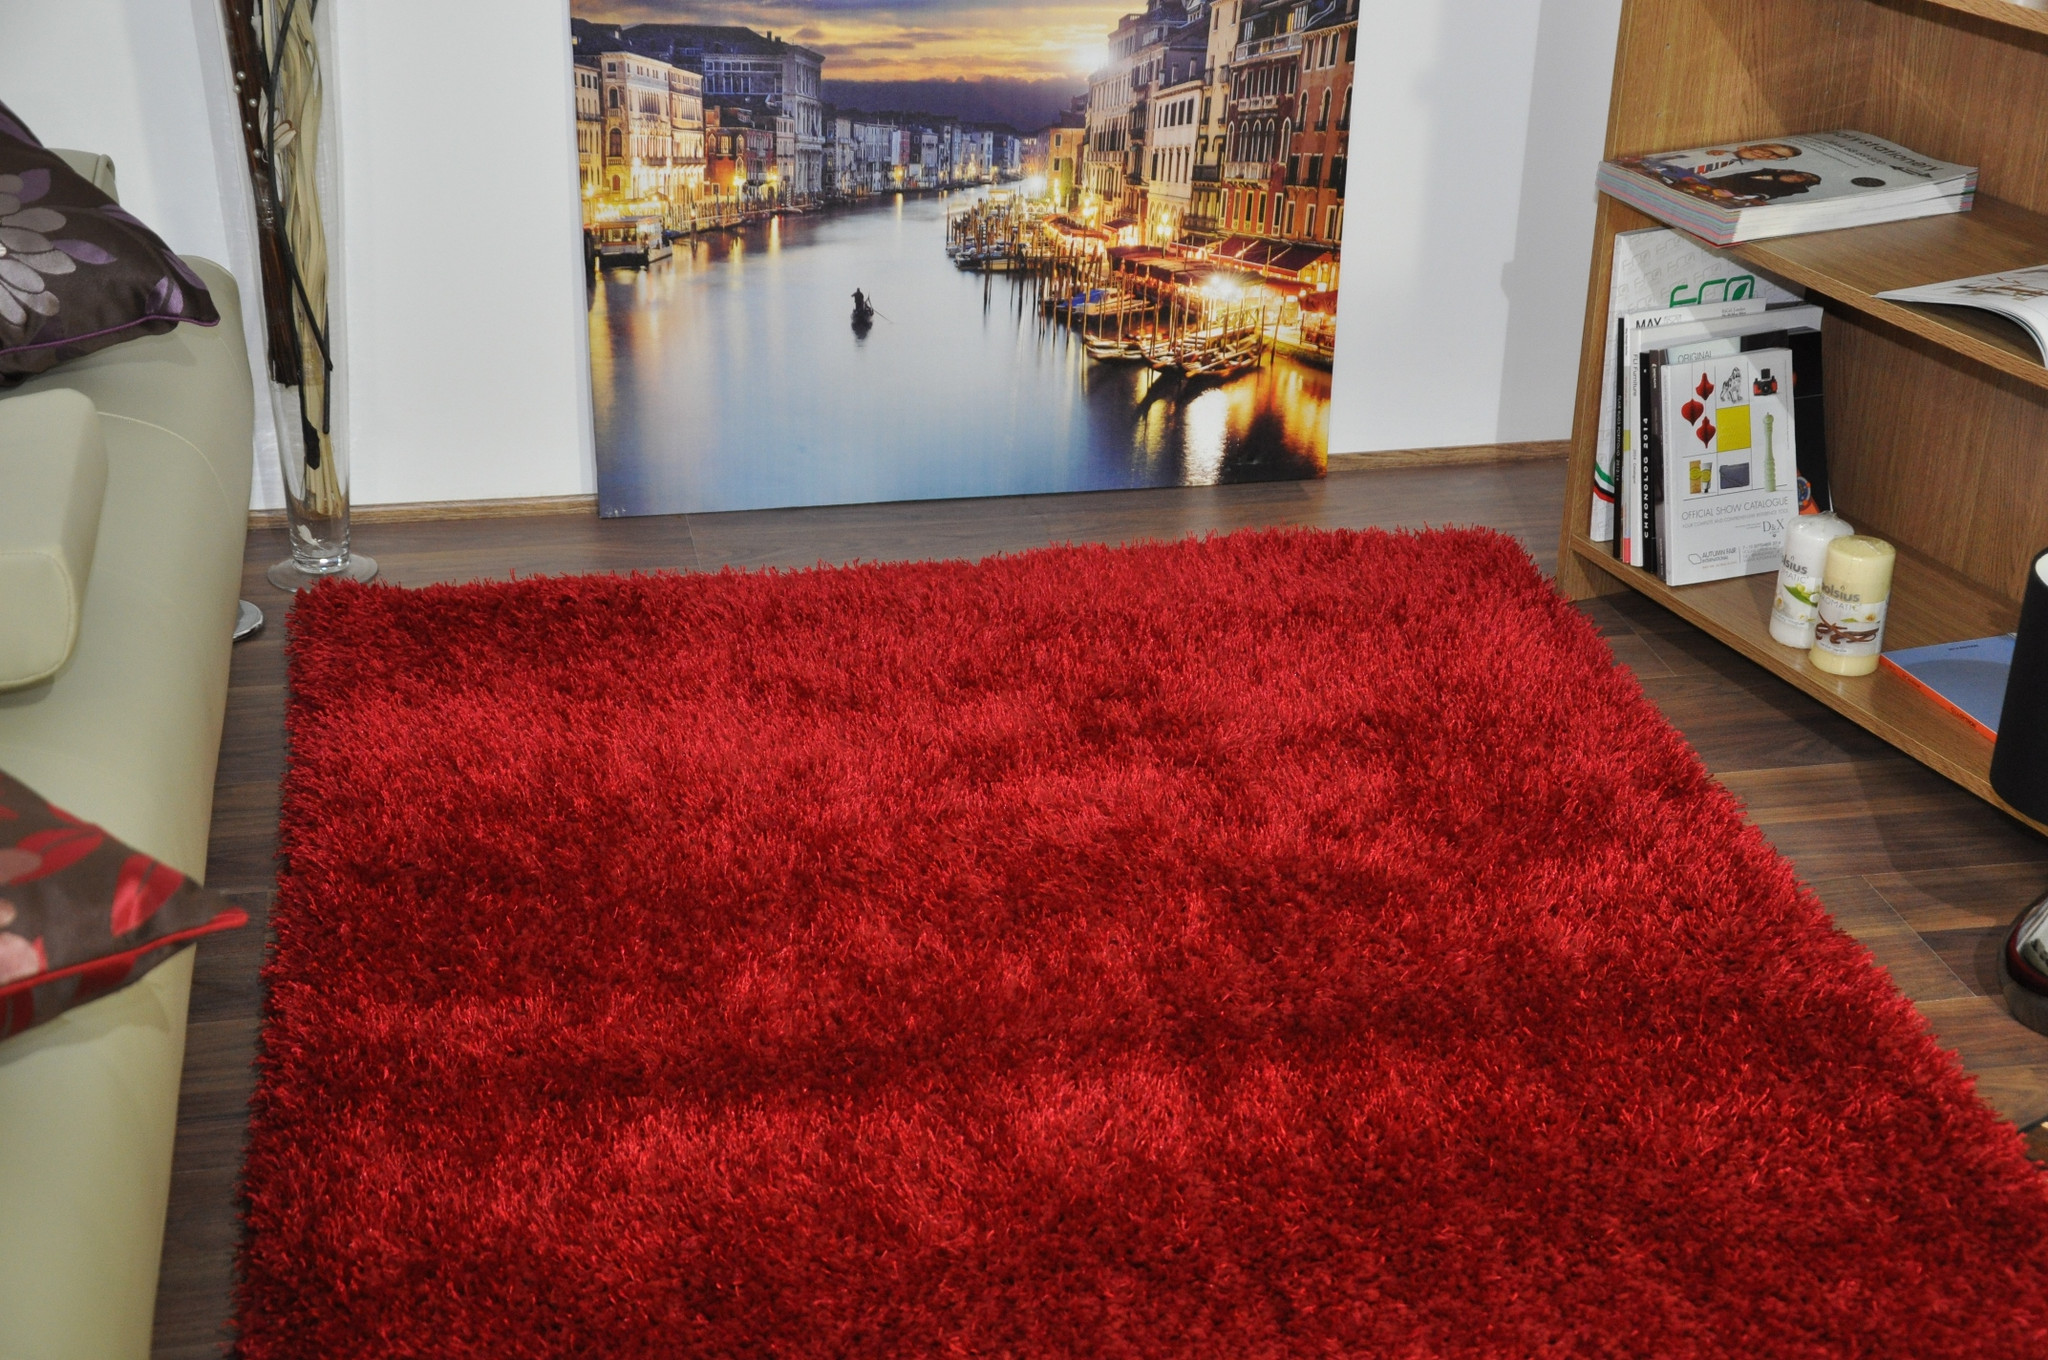 red rugs for living room livingroom:red rug doctor parts area target 8x10 floor runner ft round  bathroom CPREURF